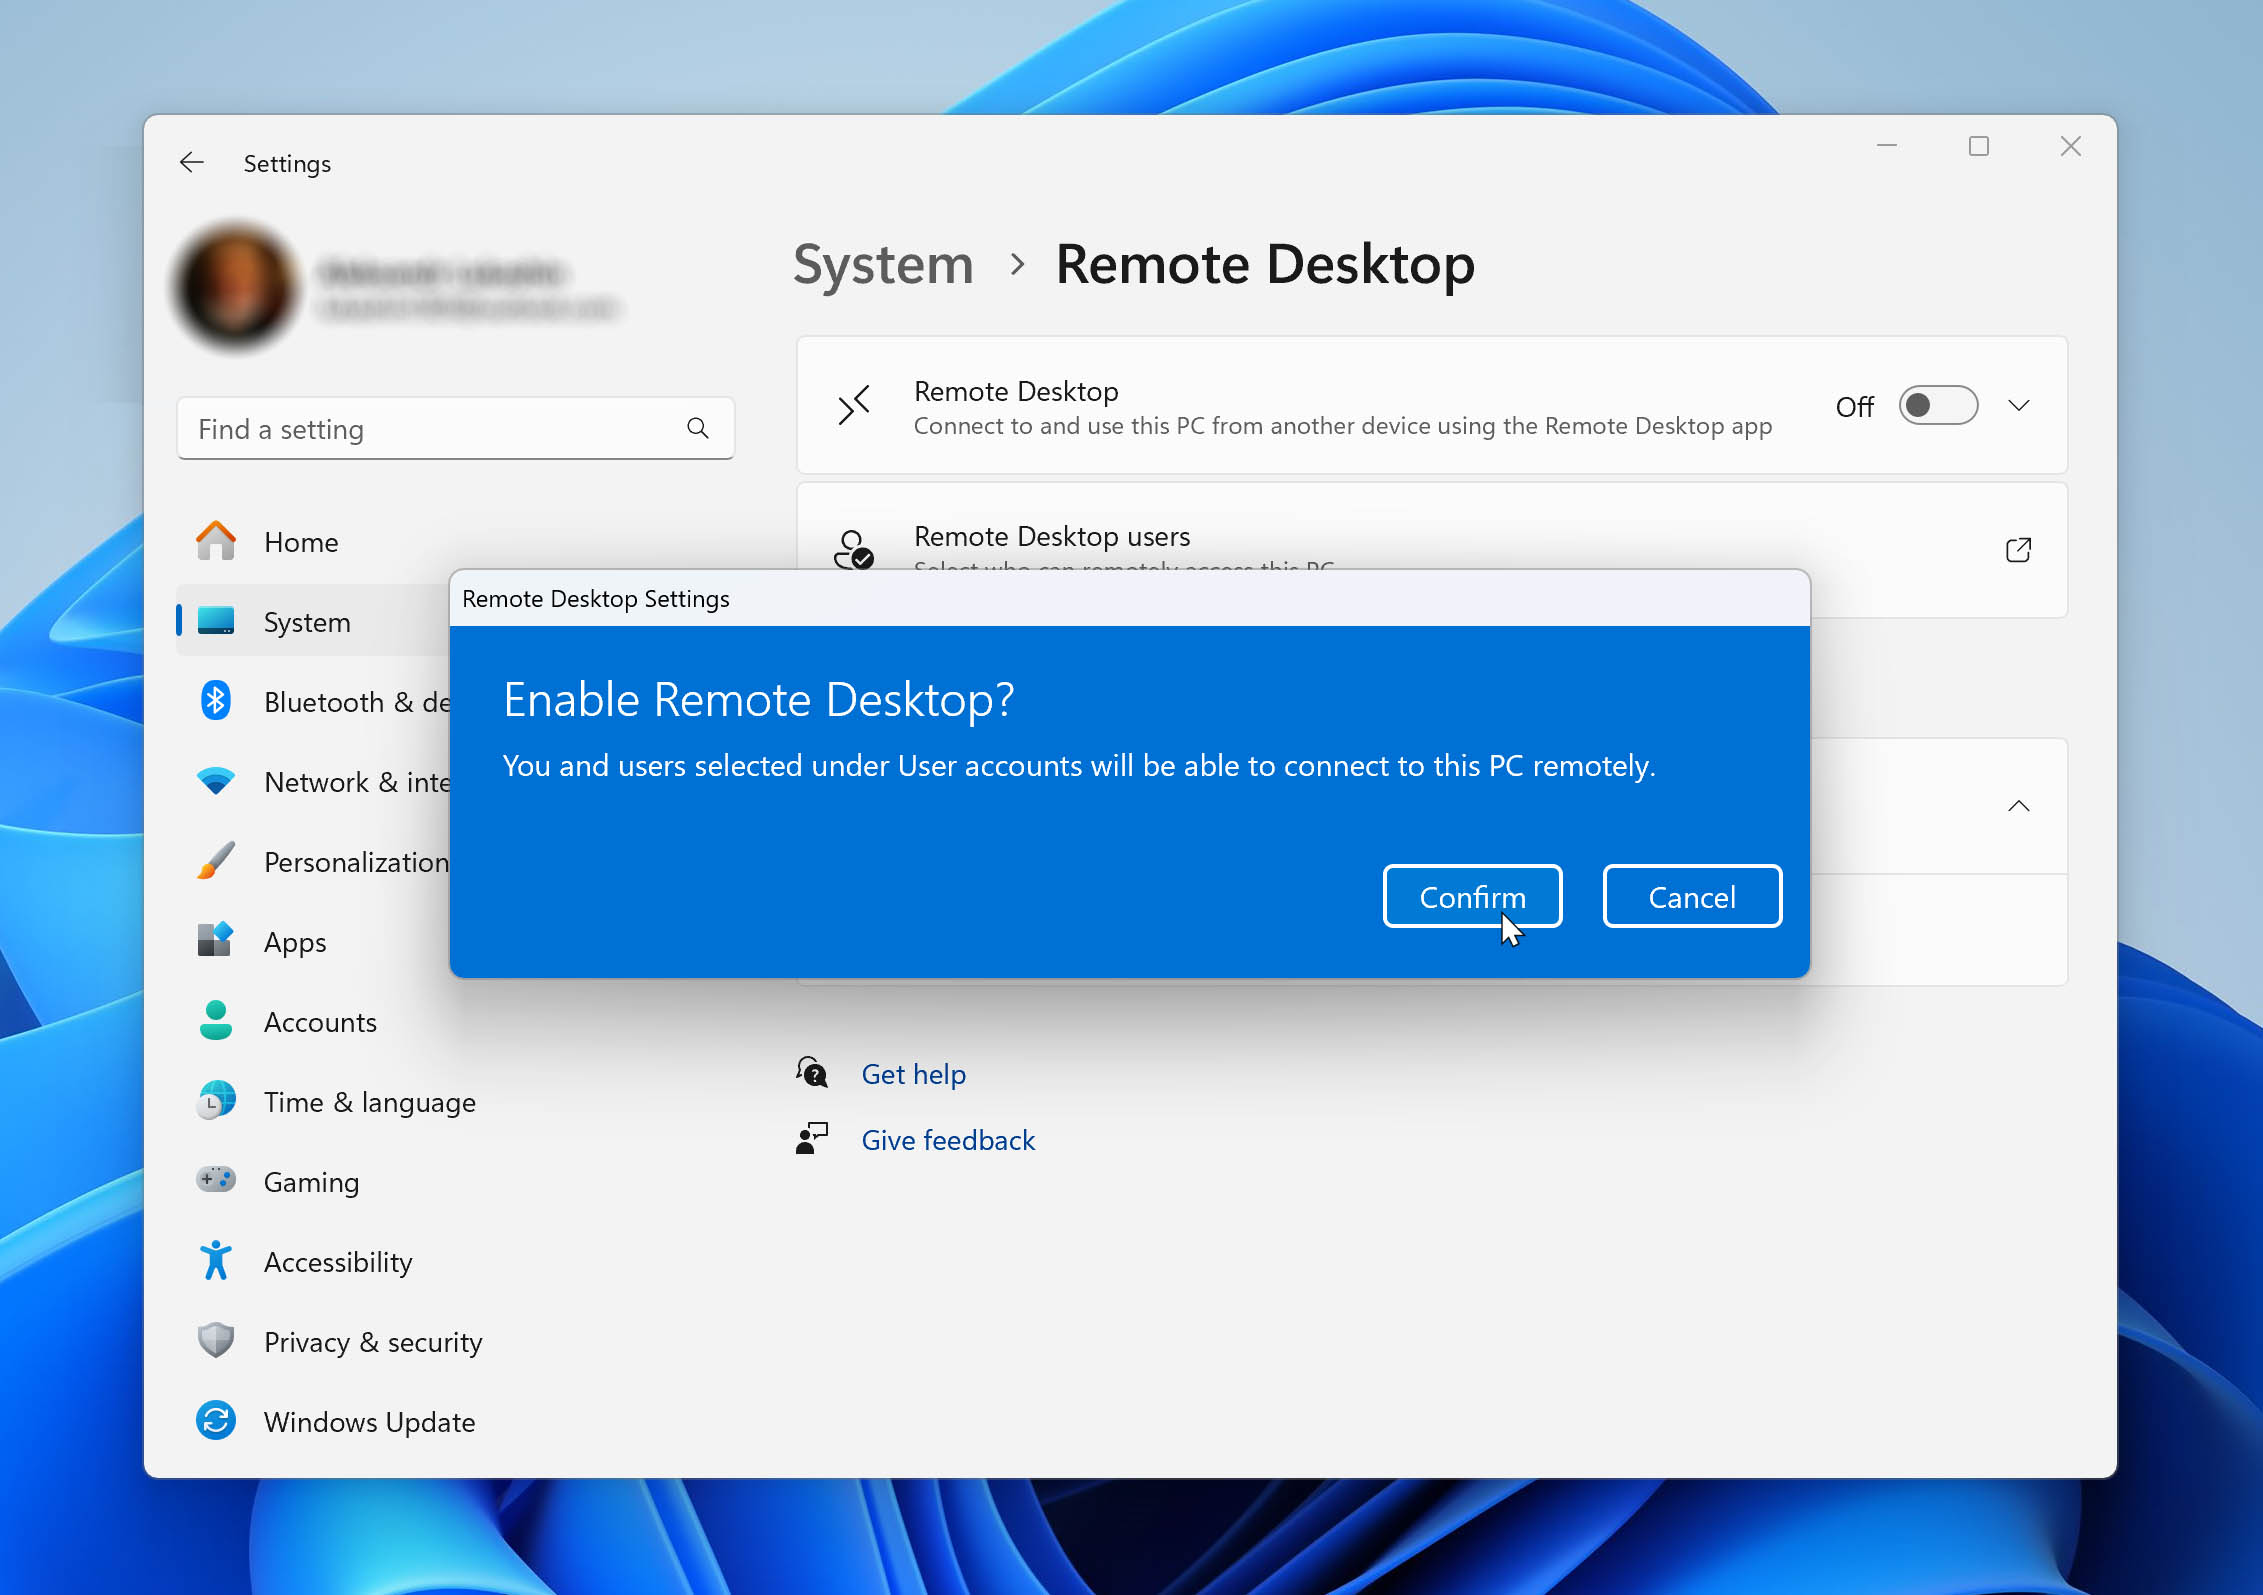 Enable remote desktop in Windows Settings